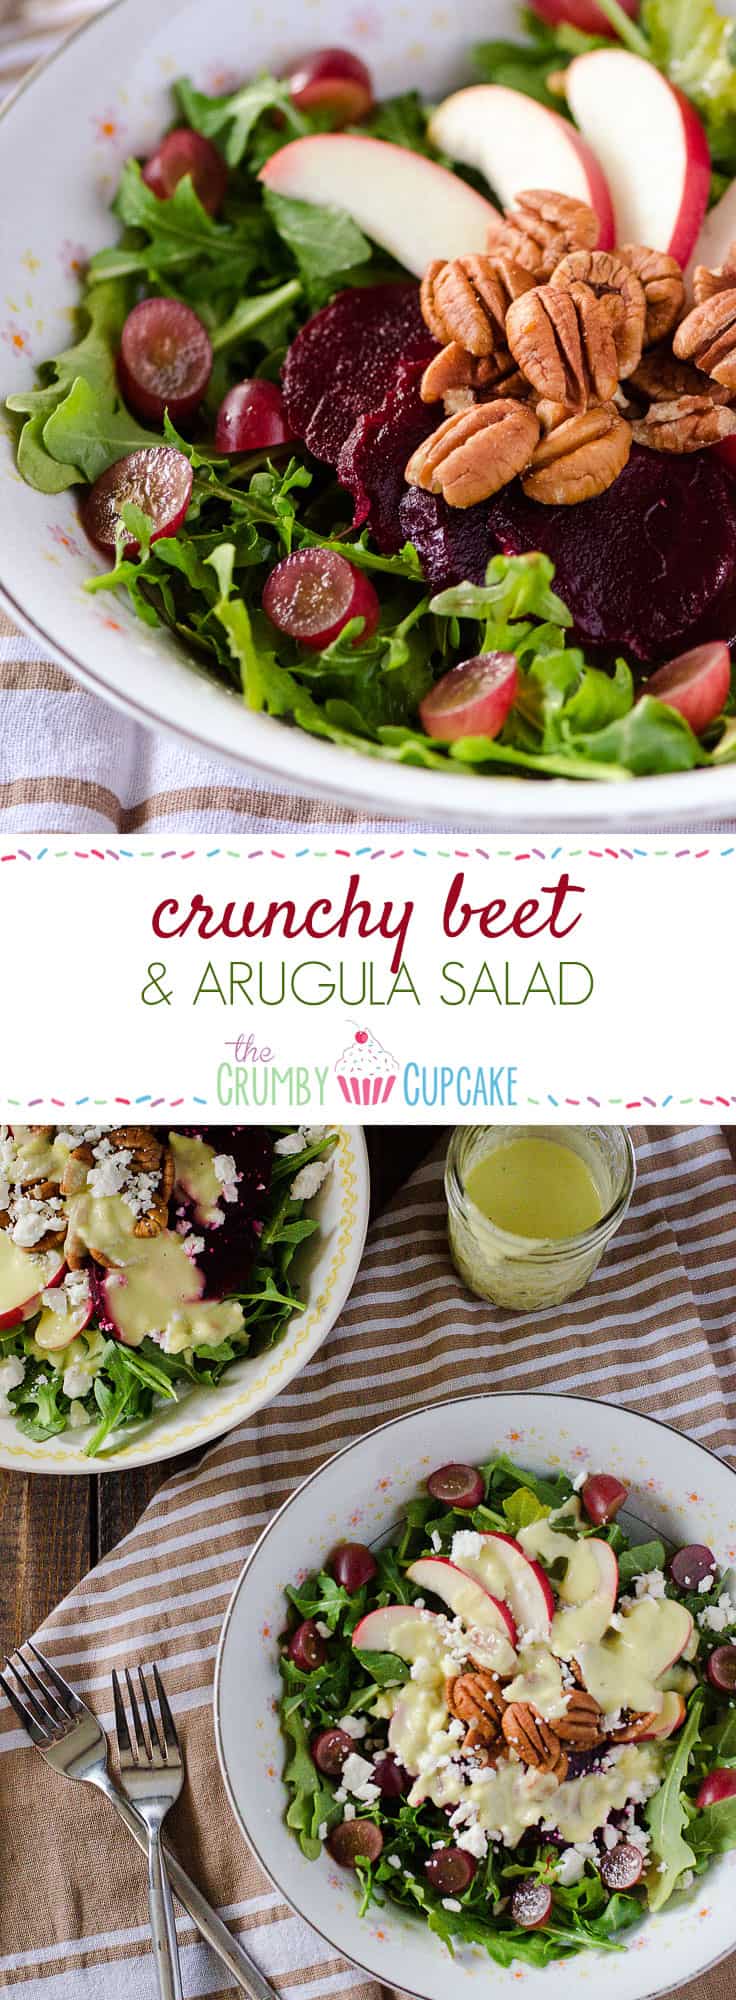 Crunchy Beet & Arugula Salad • The Crumby Kitchen